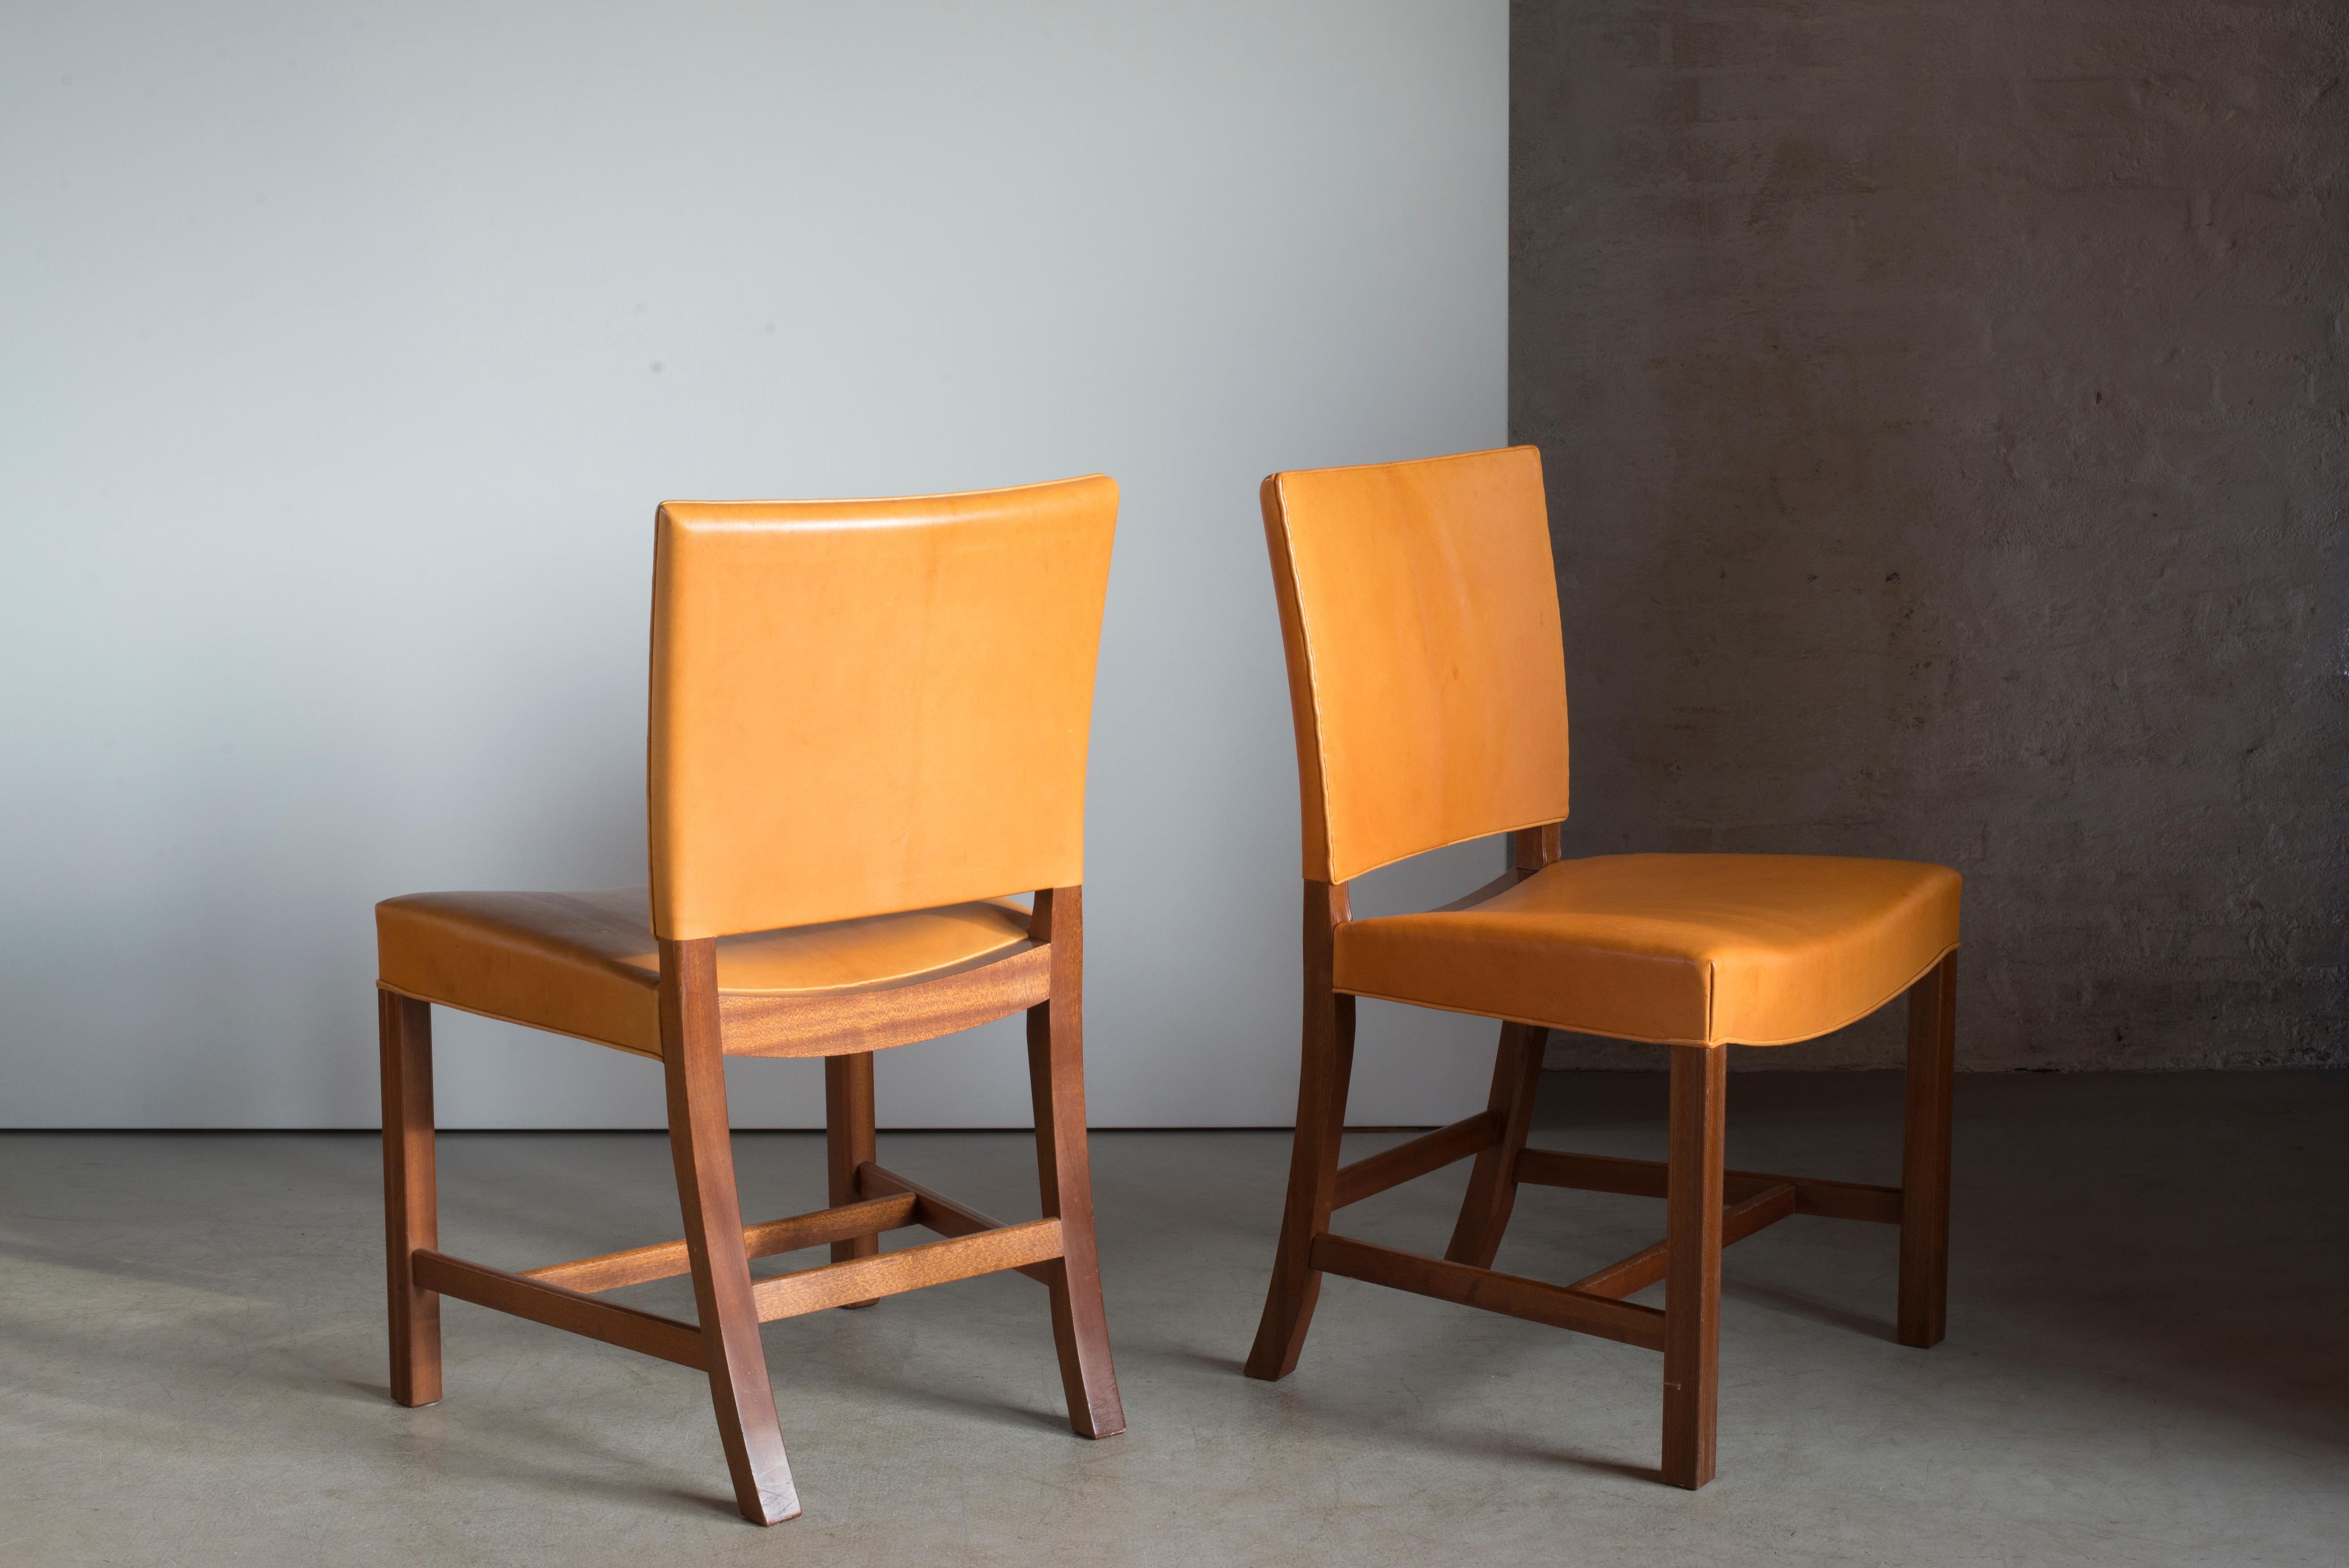 Scandinavian Modern Kaare Klint Pair of Red Chairs for Rud Rasmussen